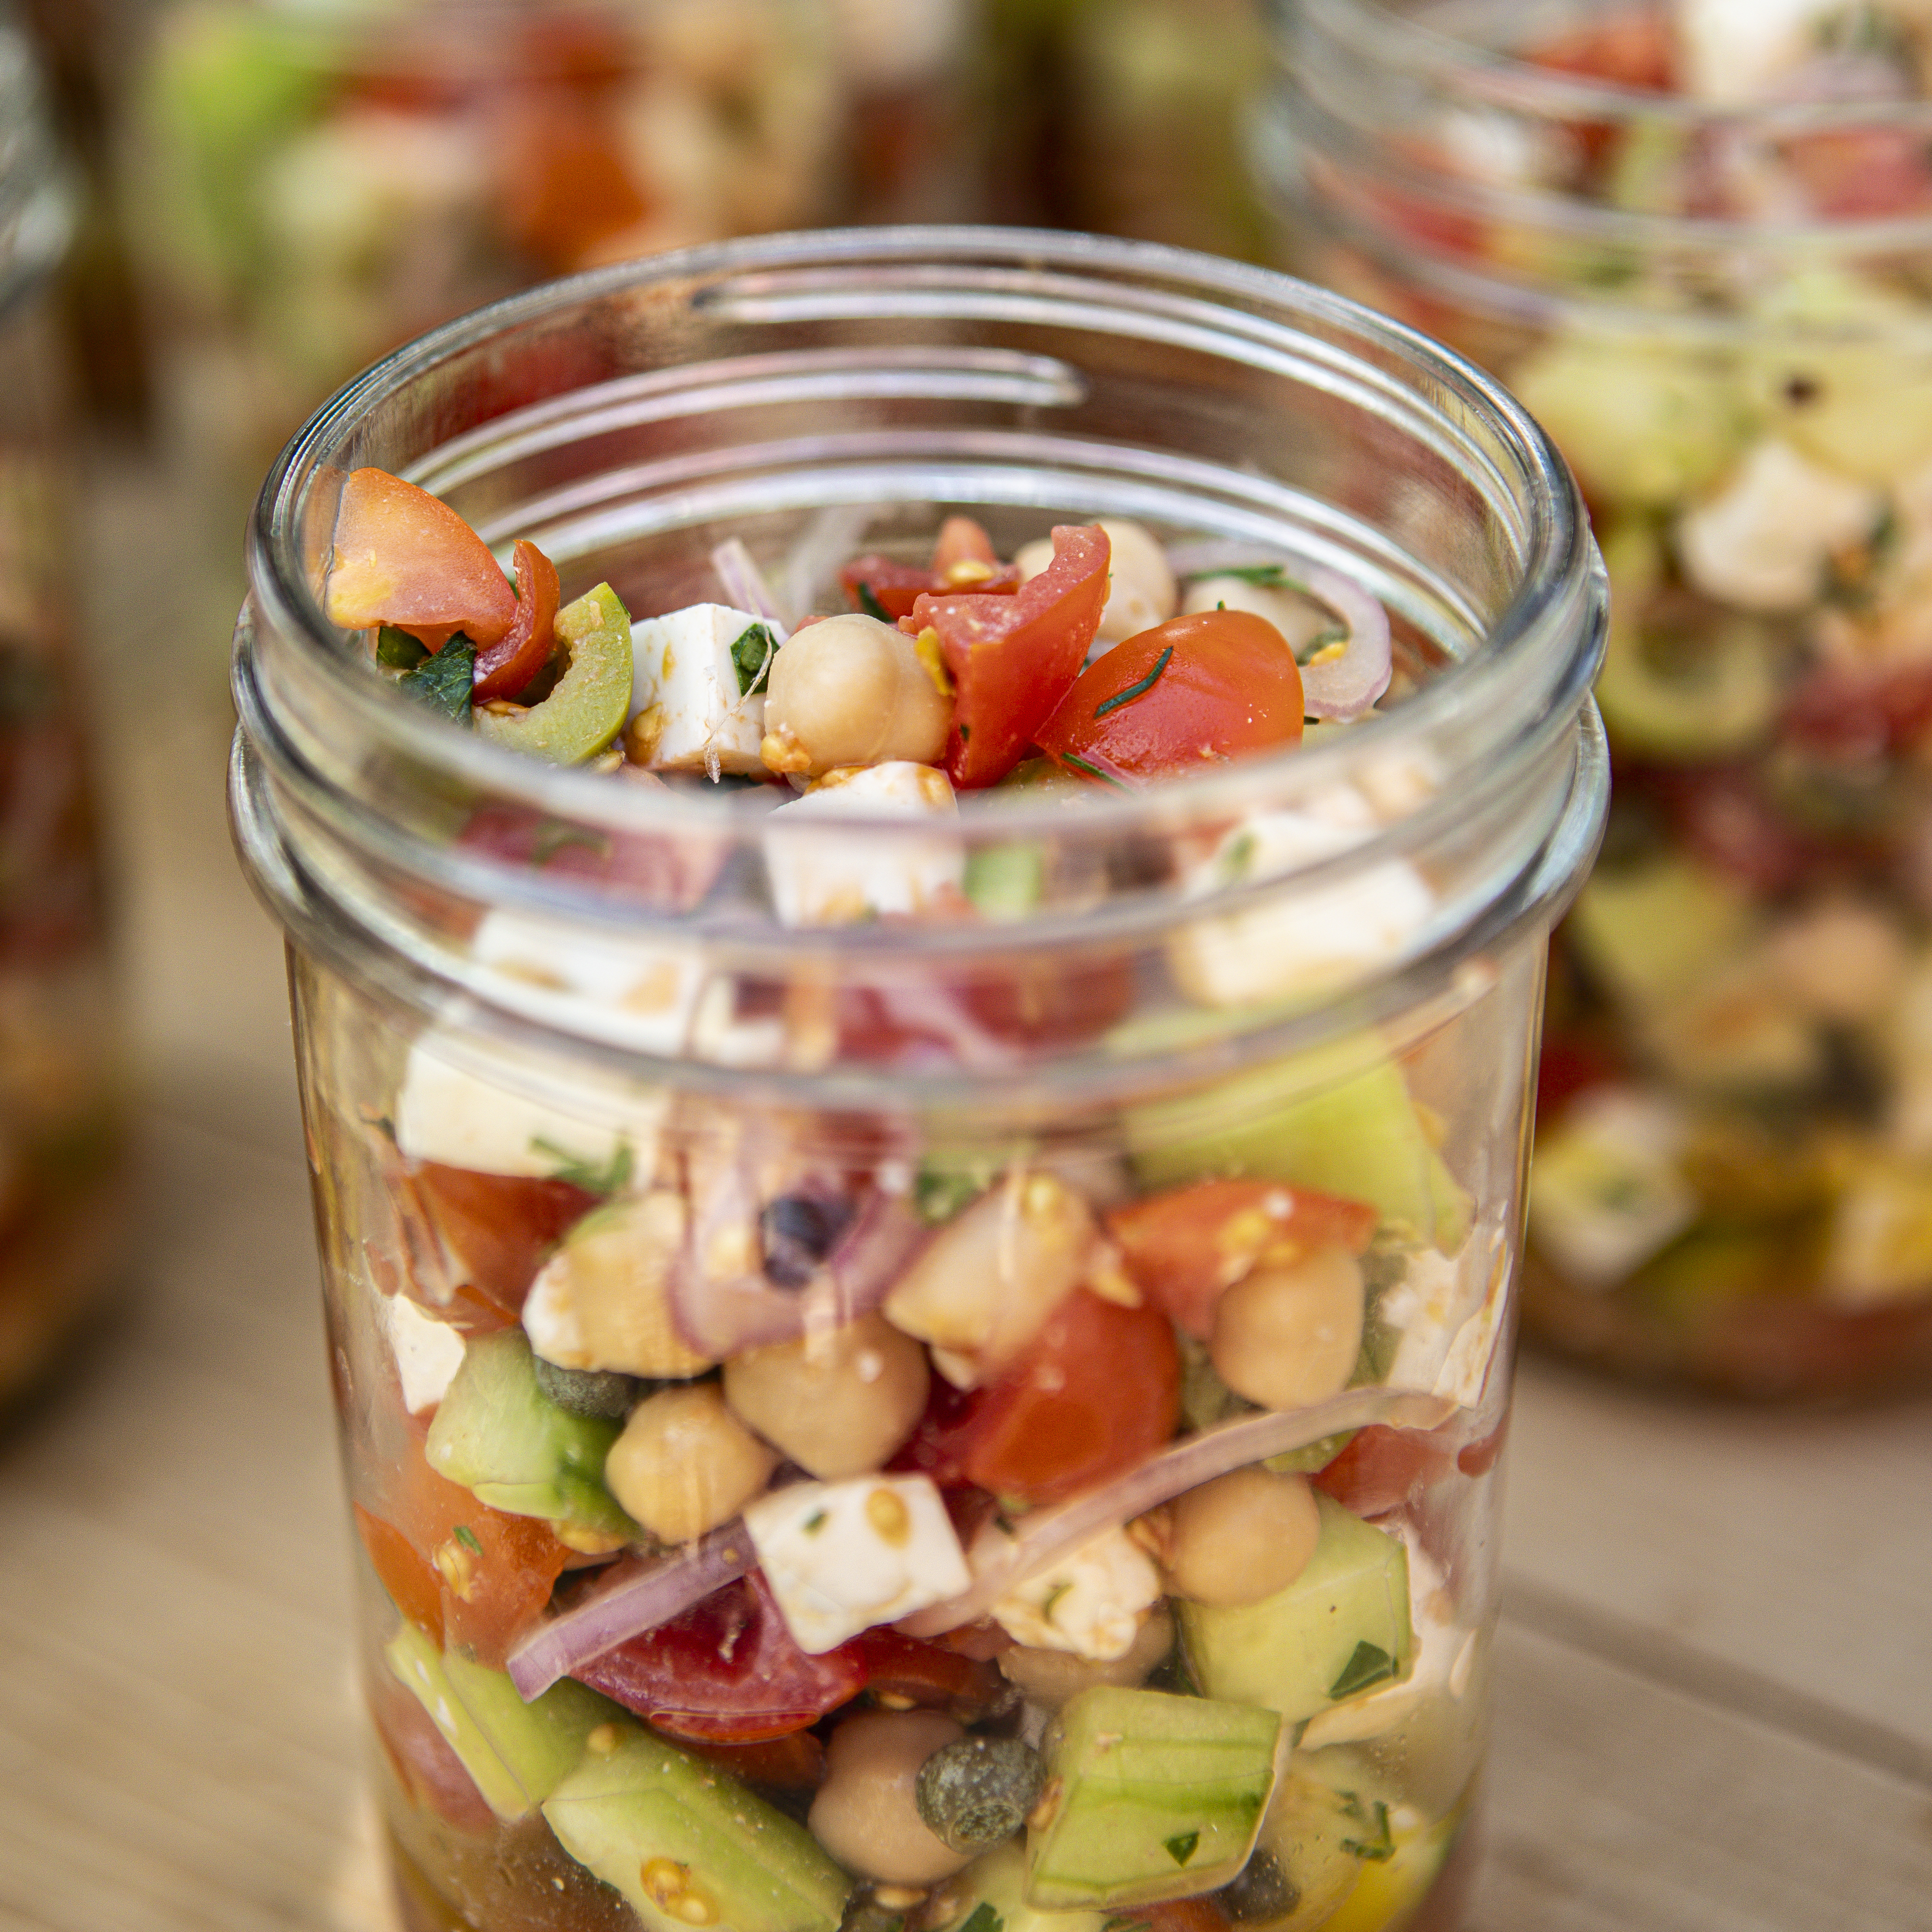 Mediterranean Mason Jar Salads - Eat Yourself Skinny